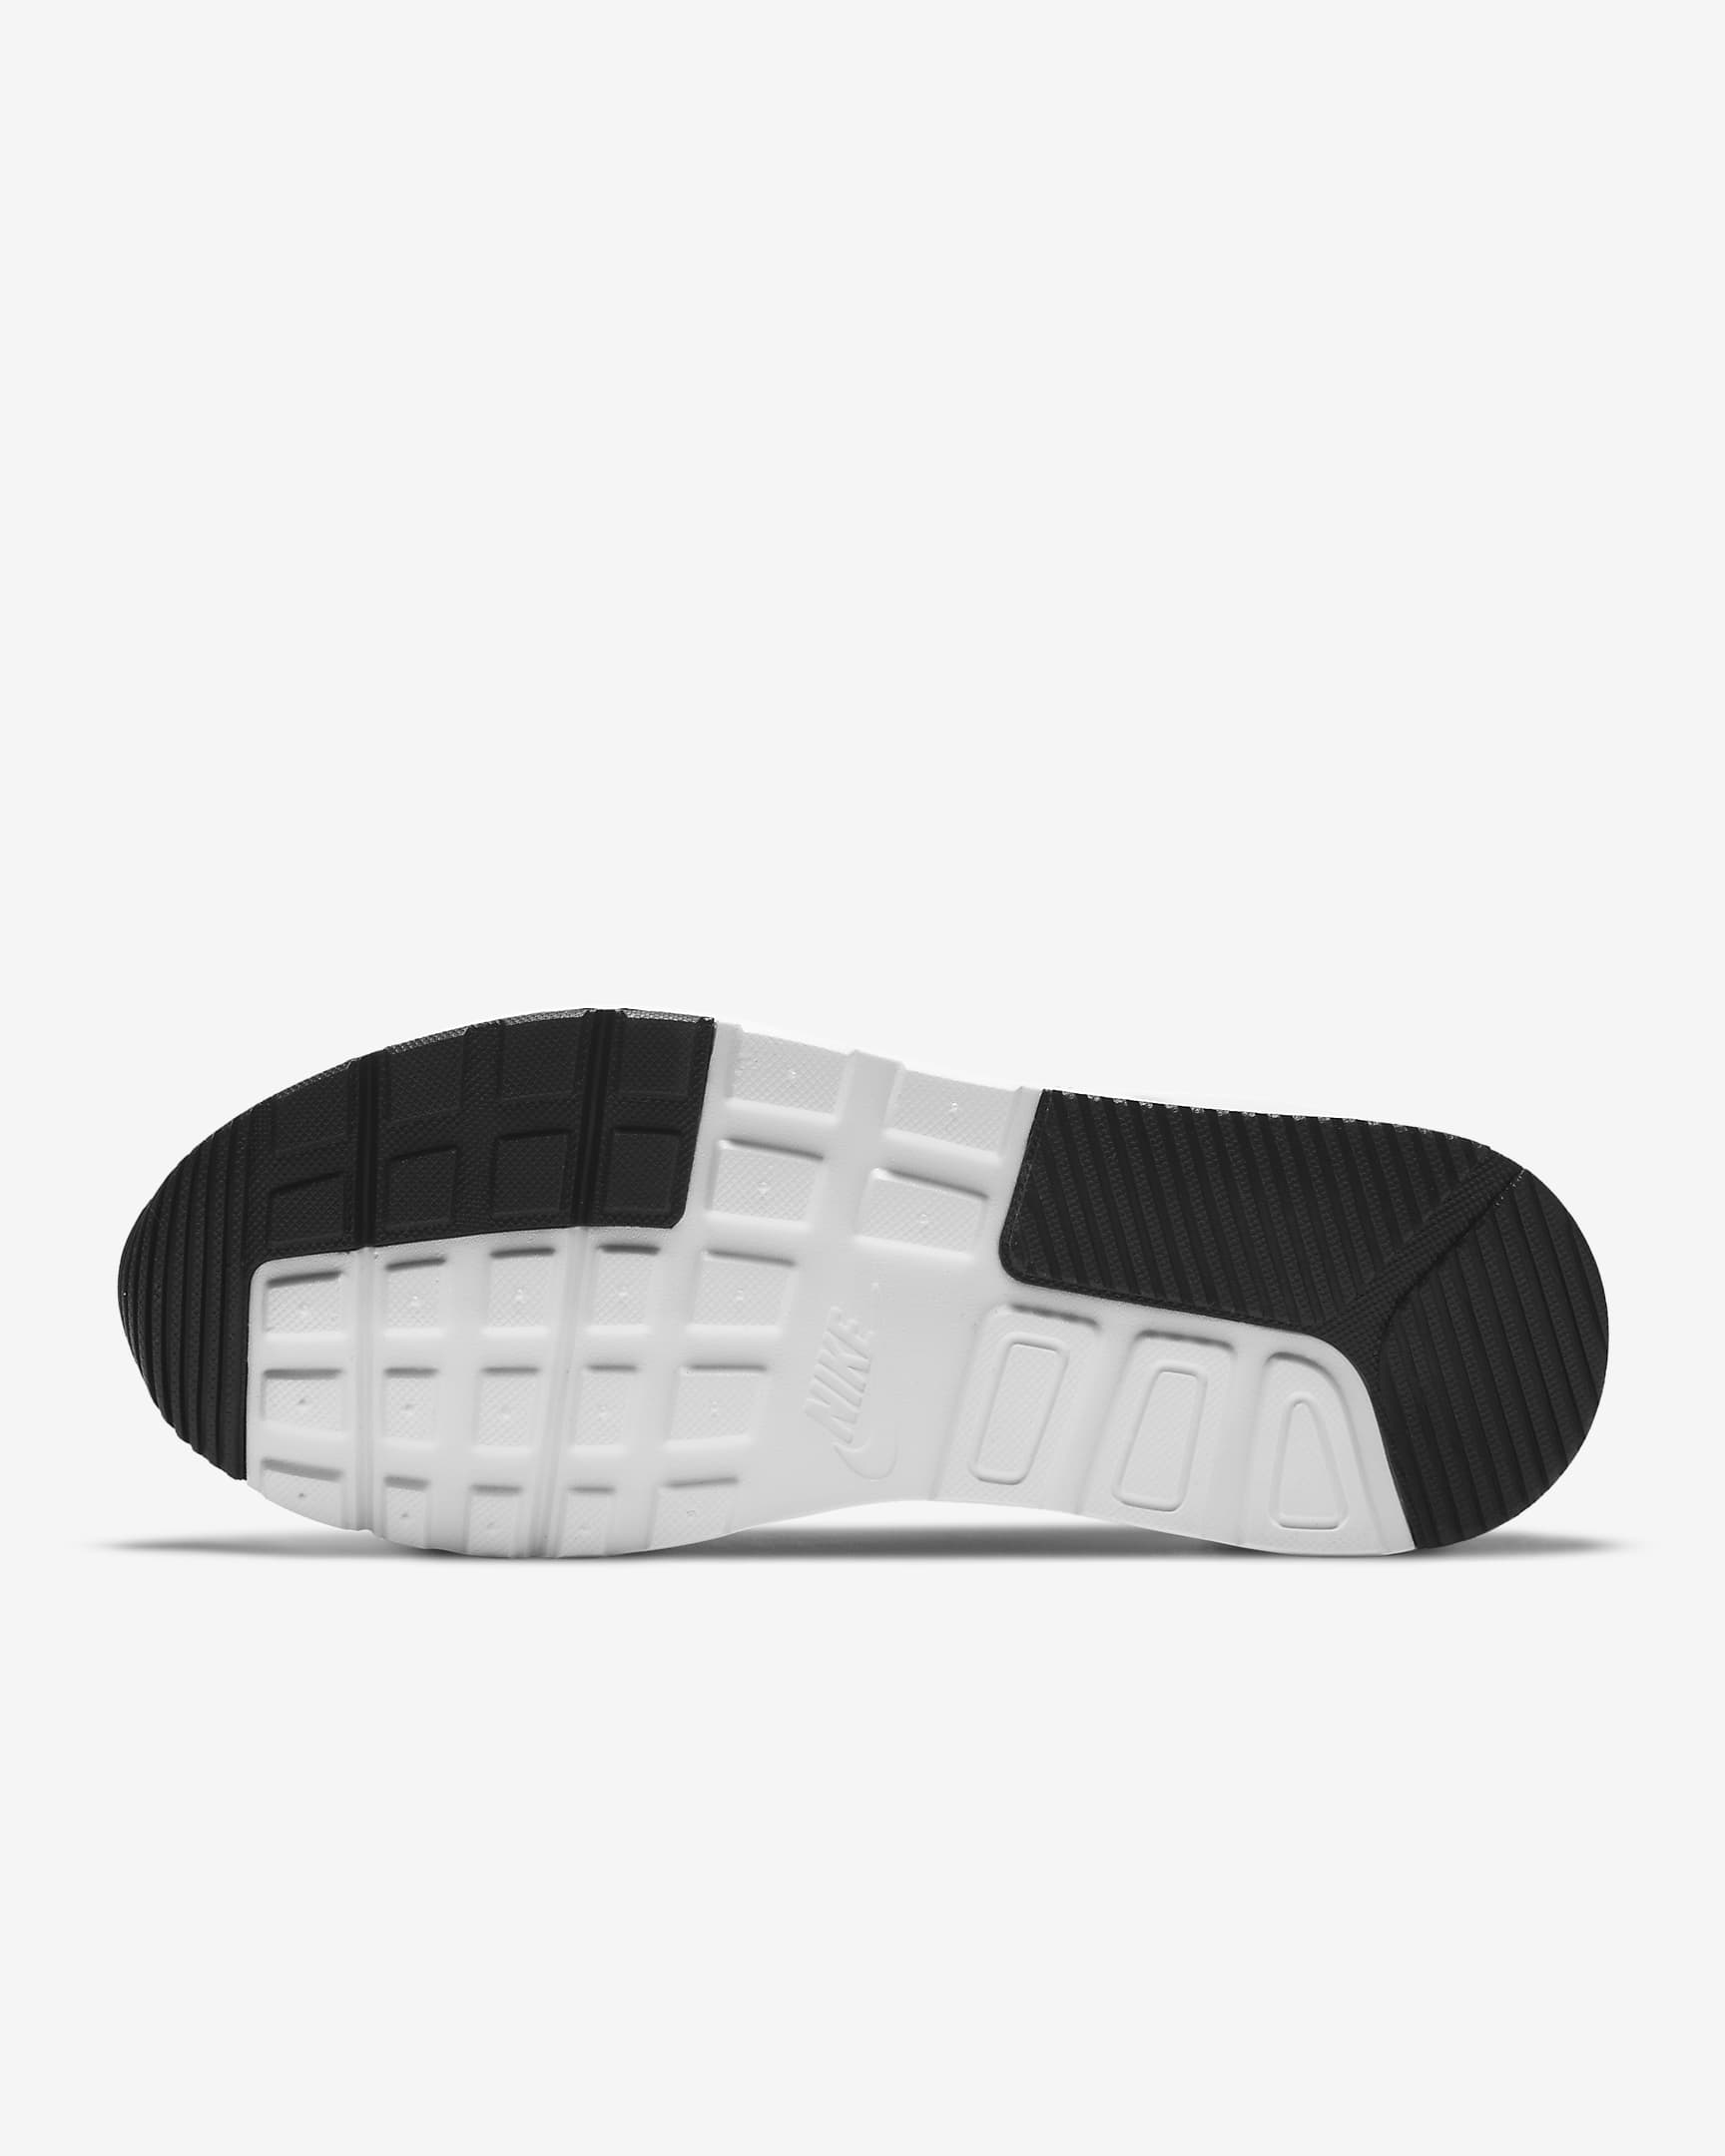 Nike Air Max SC Women's Shoes - Black/Black/White